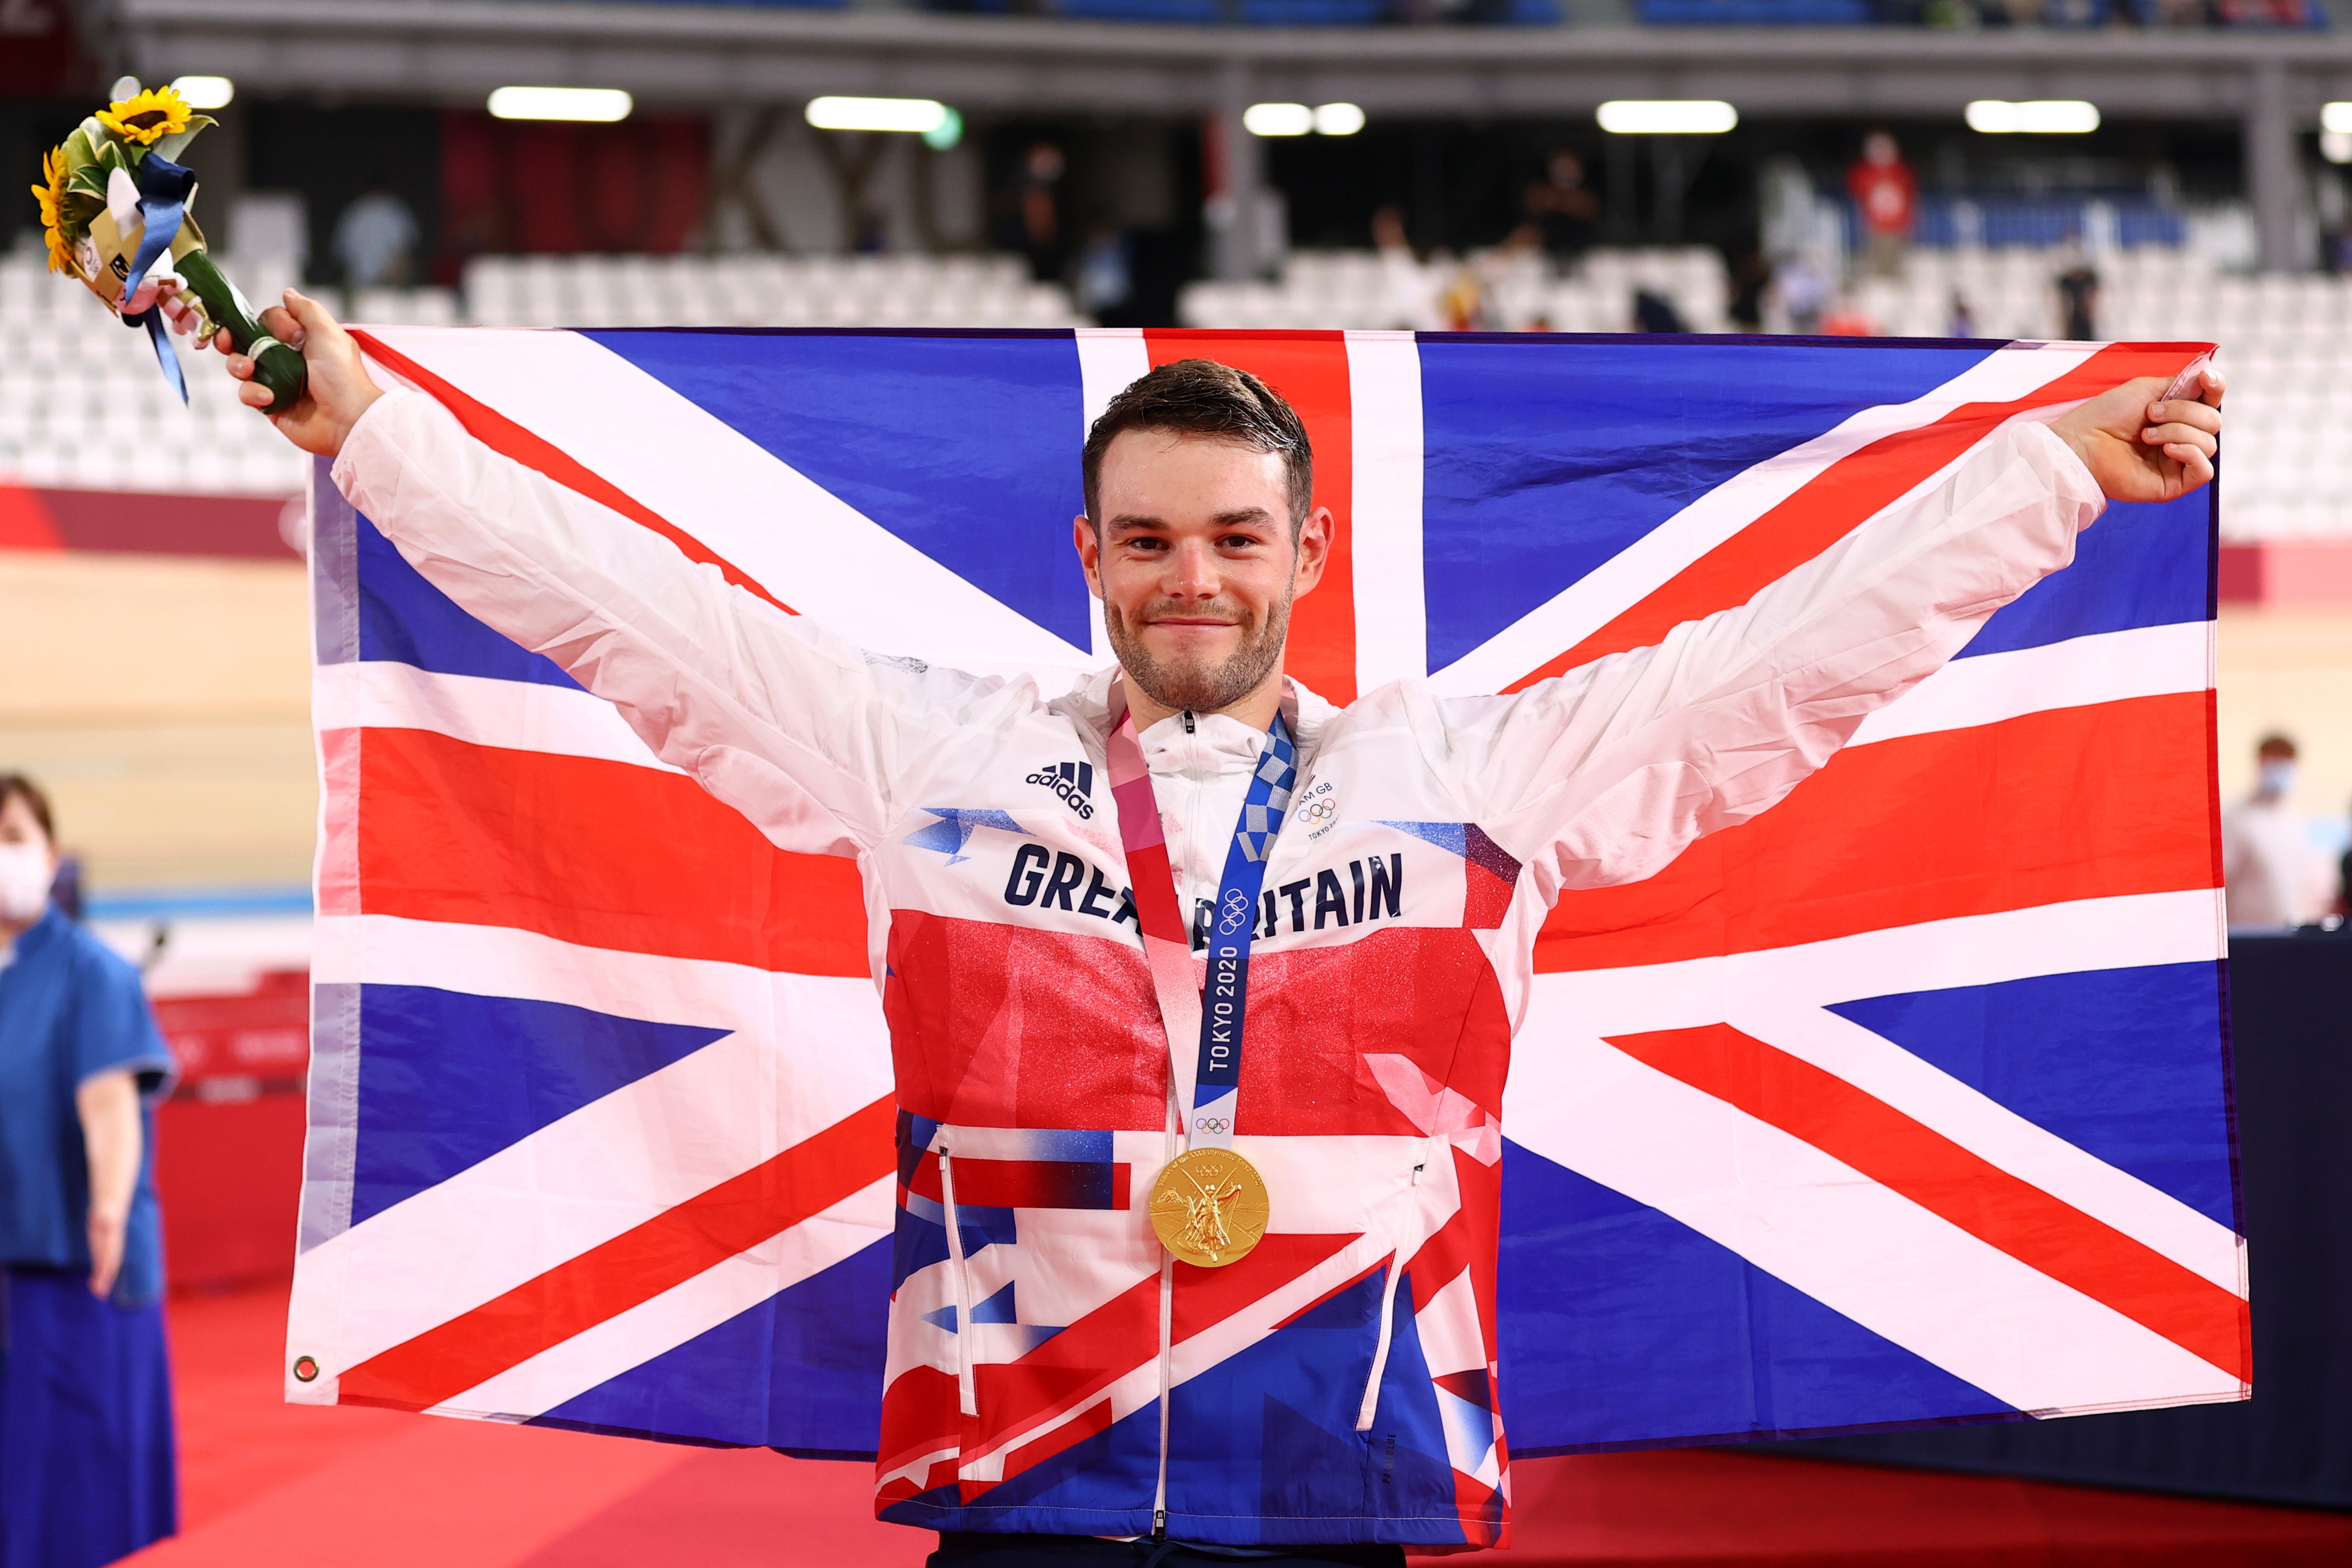 Matt Walls won gold for Great Britain